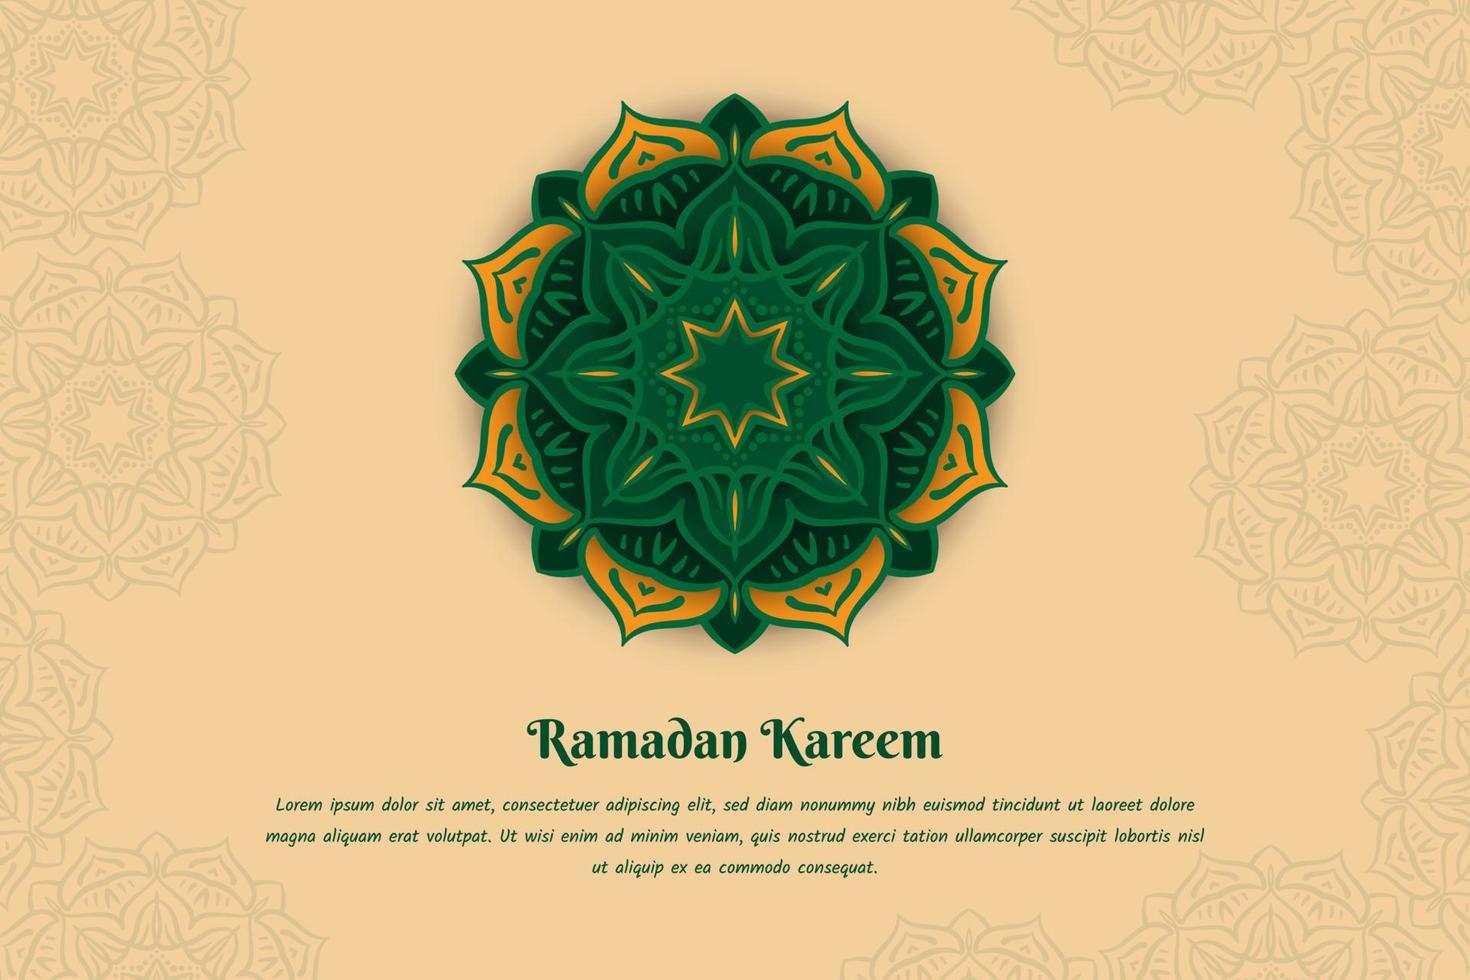 Ramadan kareem or eid mubarak template with green mandala in yellow background design vector